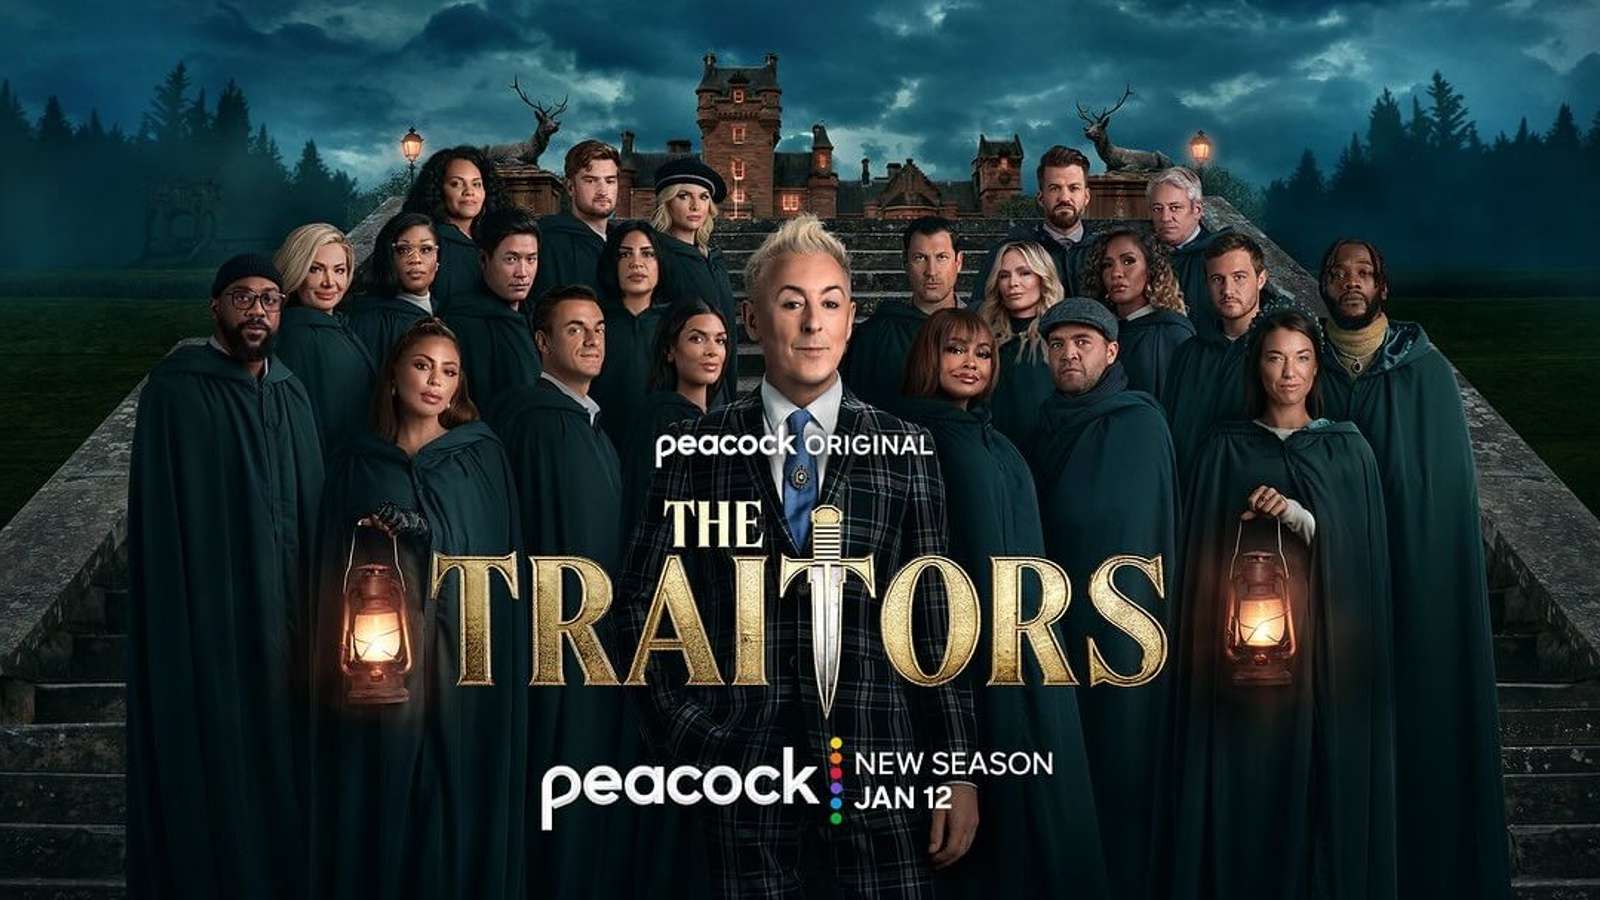 The Traitors season 2 cast